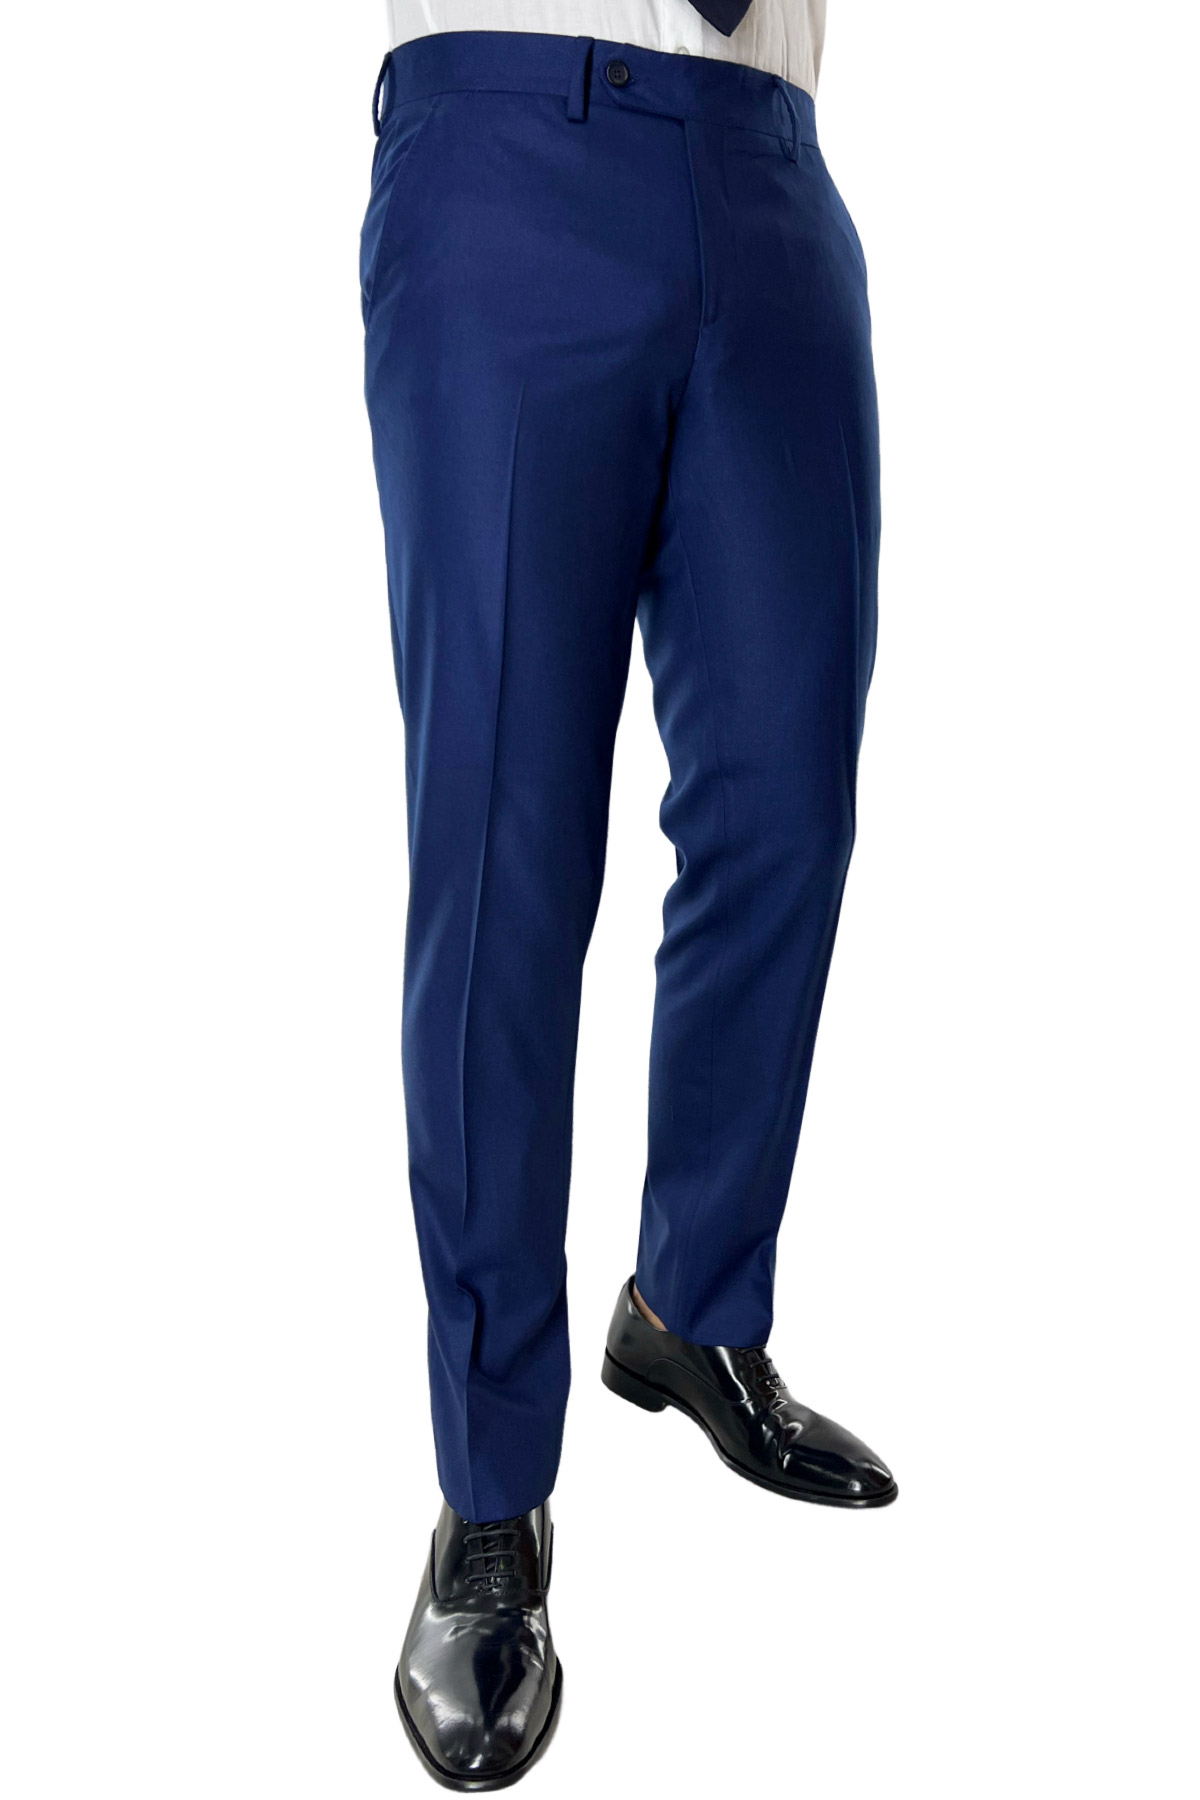 Pantalone uomo royal blu in lana Holland & Sherry tasca america orlo a mano